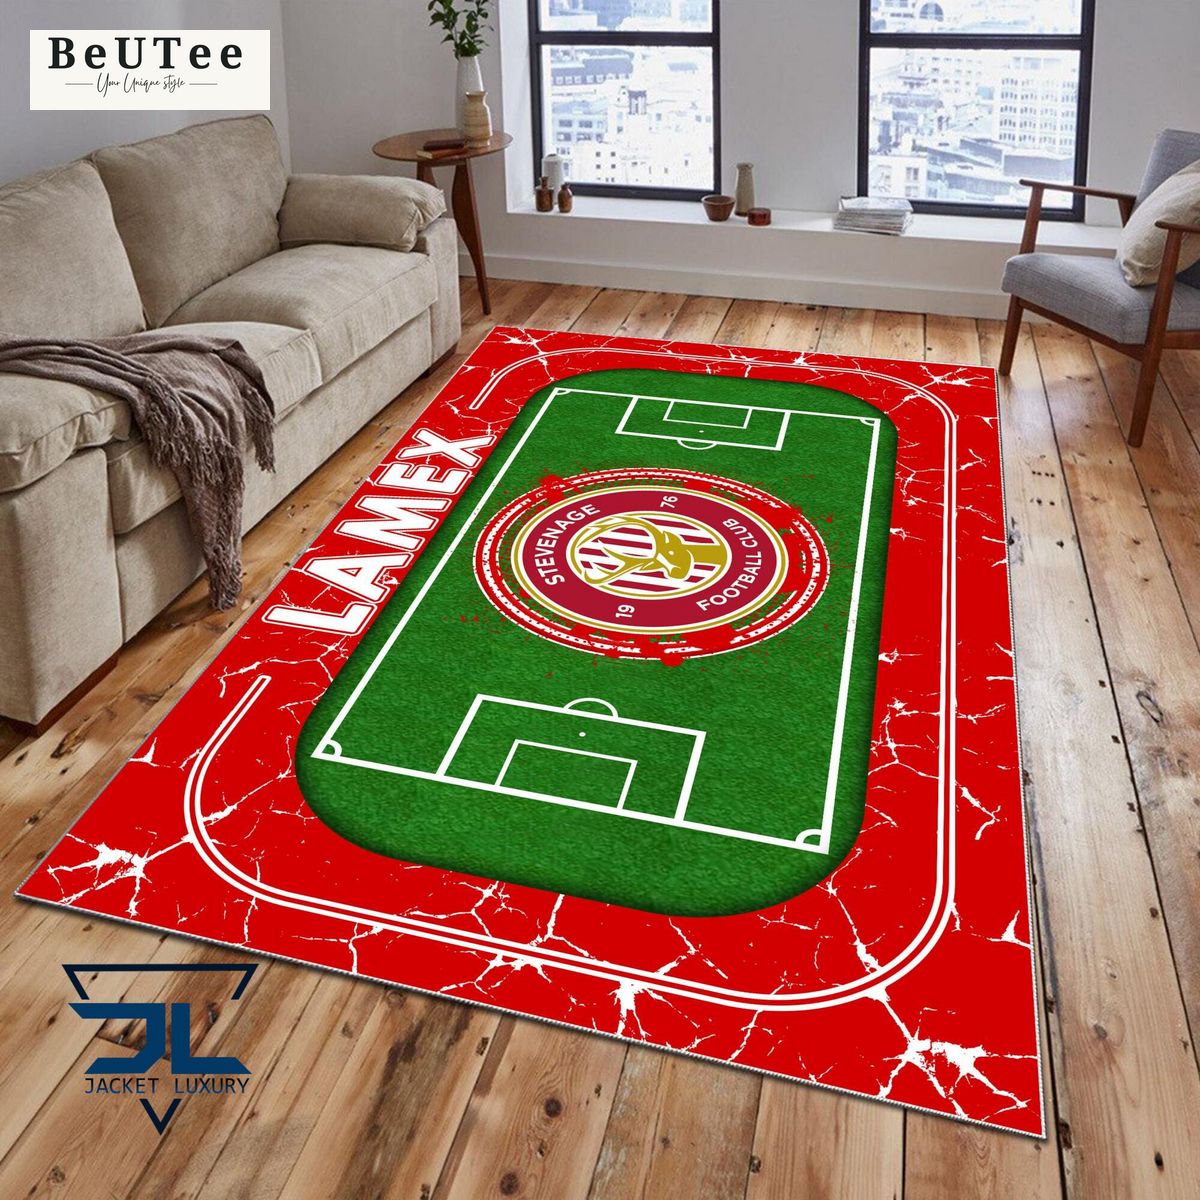 stevenage football club english football league efl premium carpet rug 1 cH5Zc